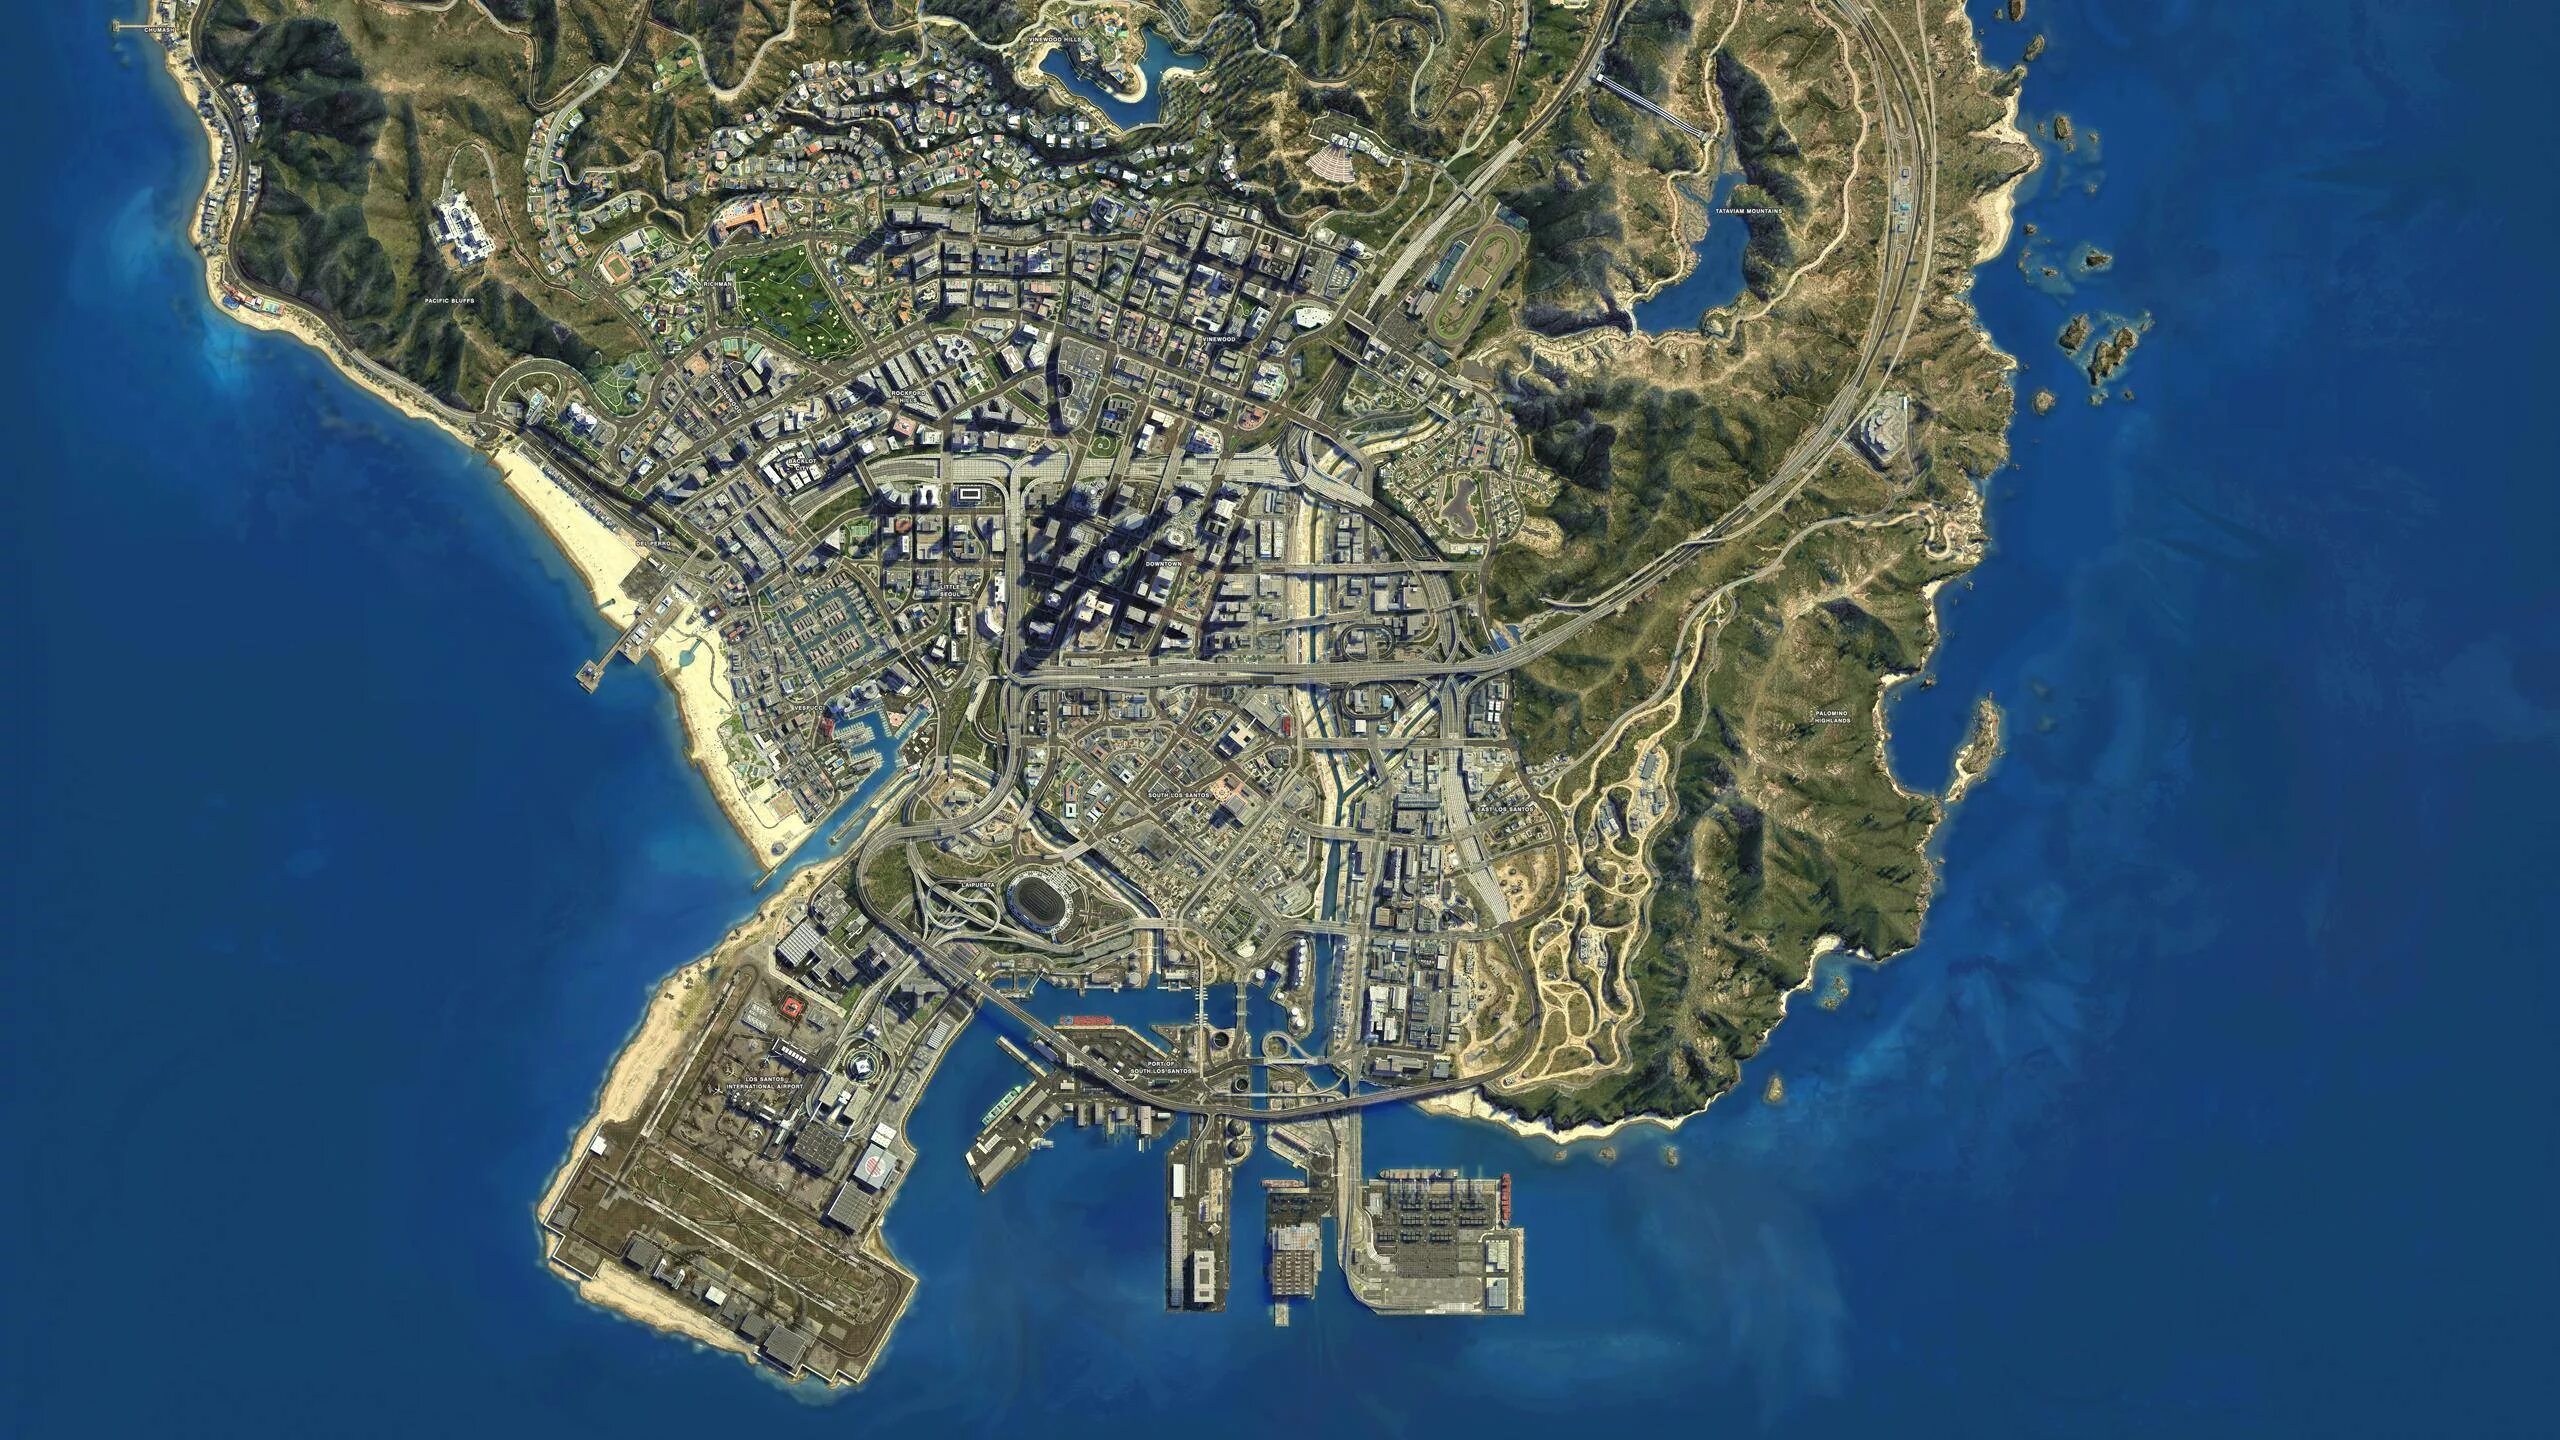 Gta mapping. GTA 5 Map. Карта GTA 5. Карта los Santos GTA 5. Карта ГТА 5 РП.